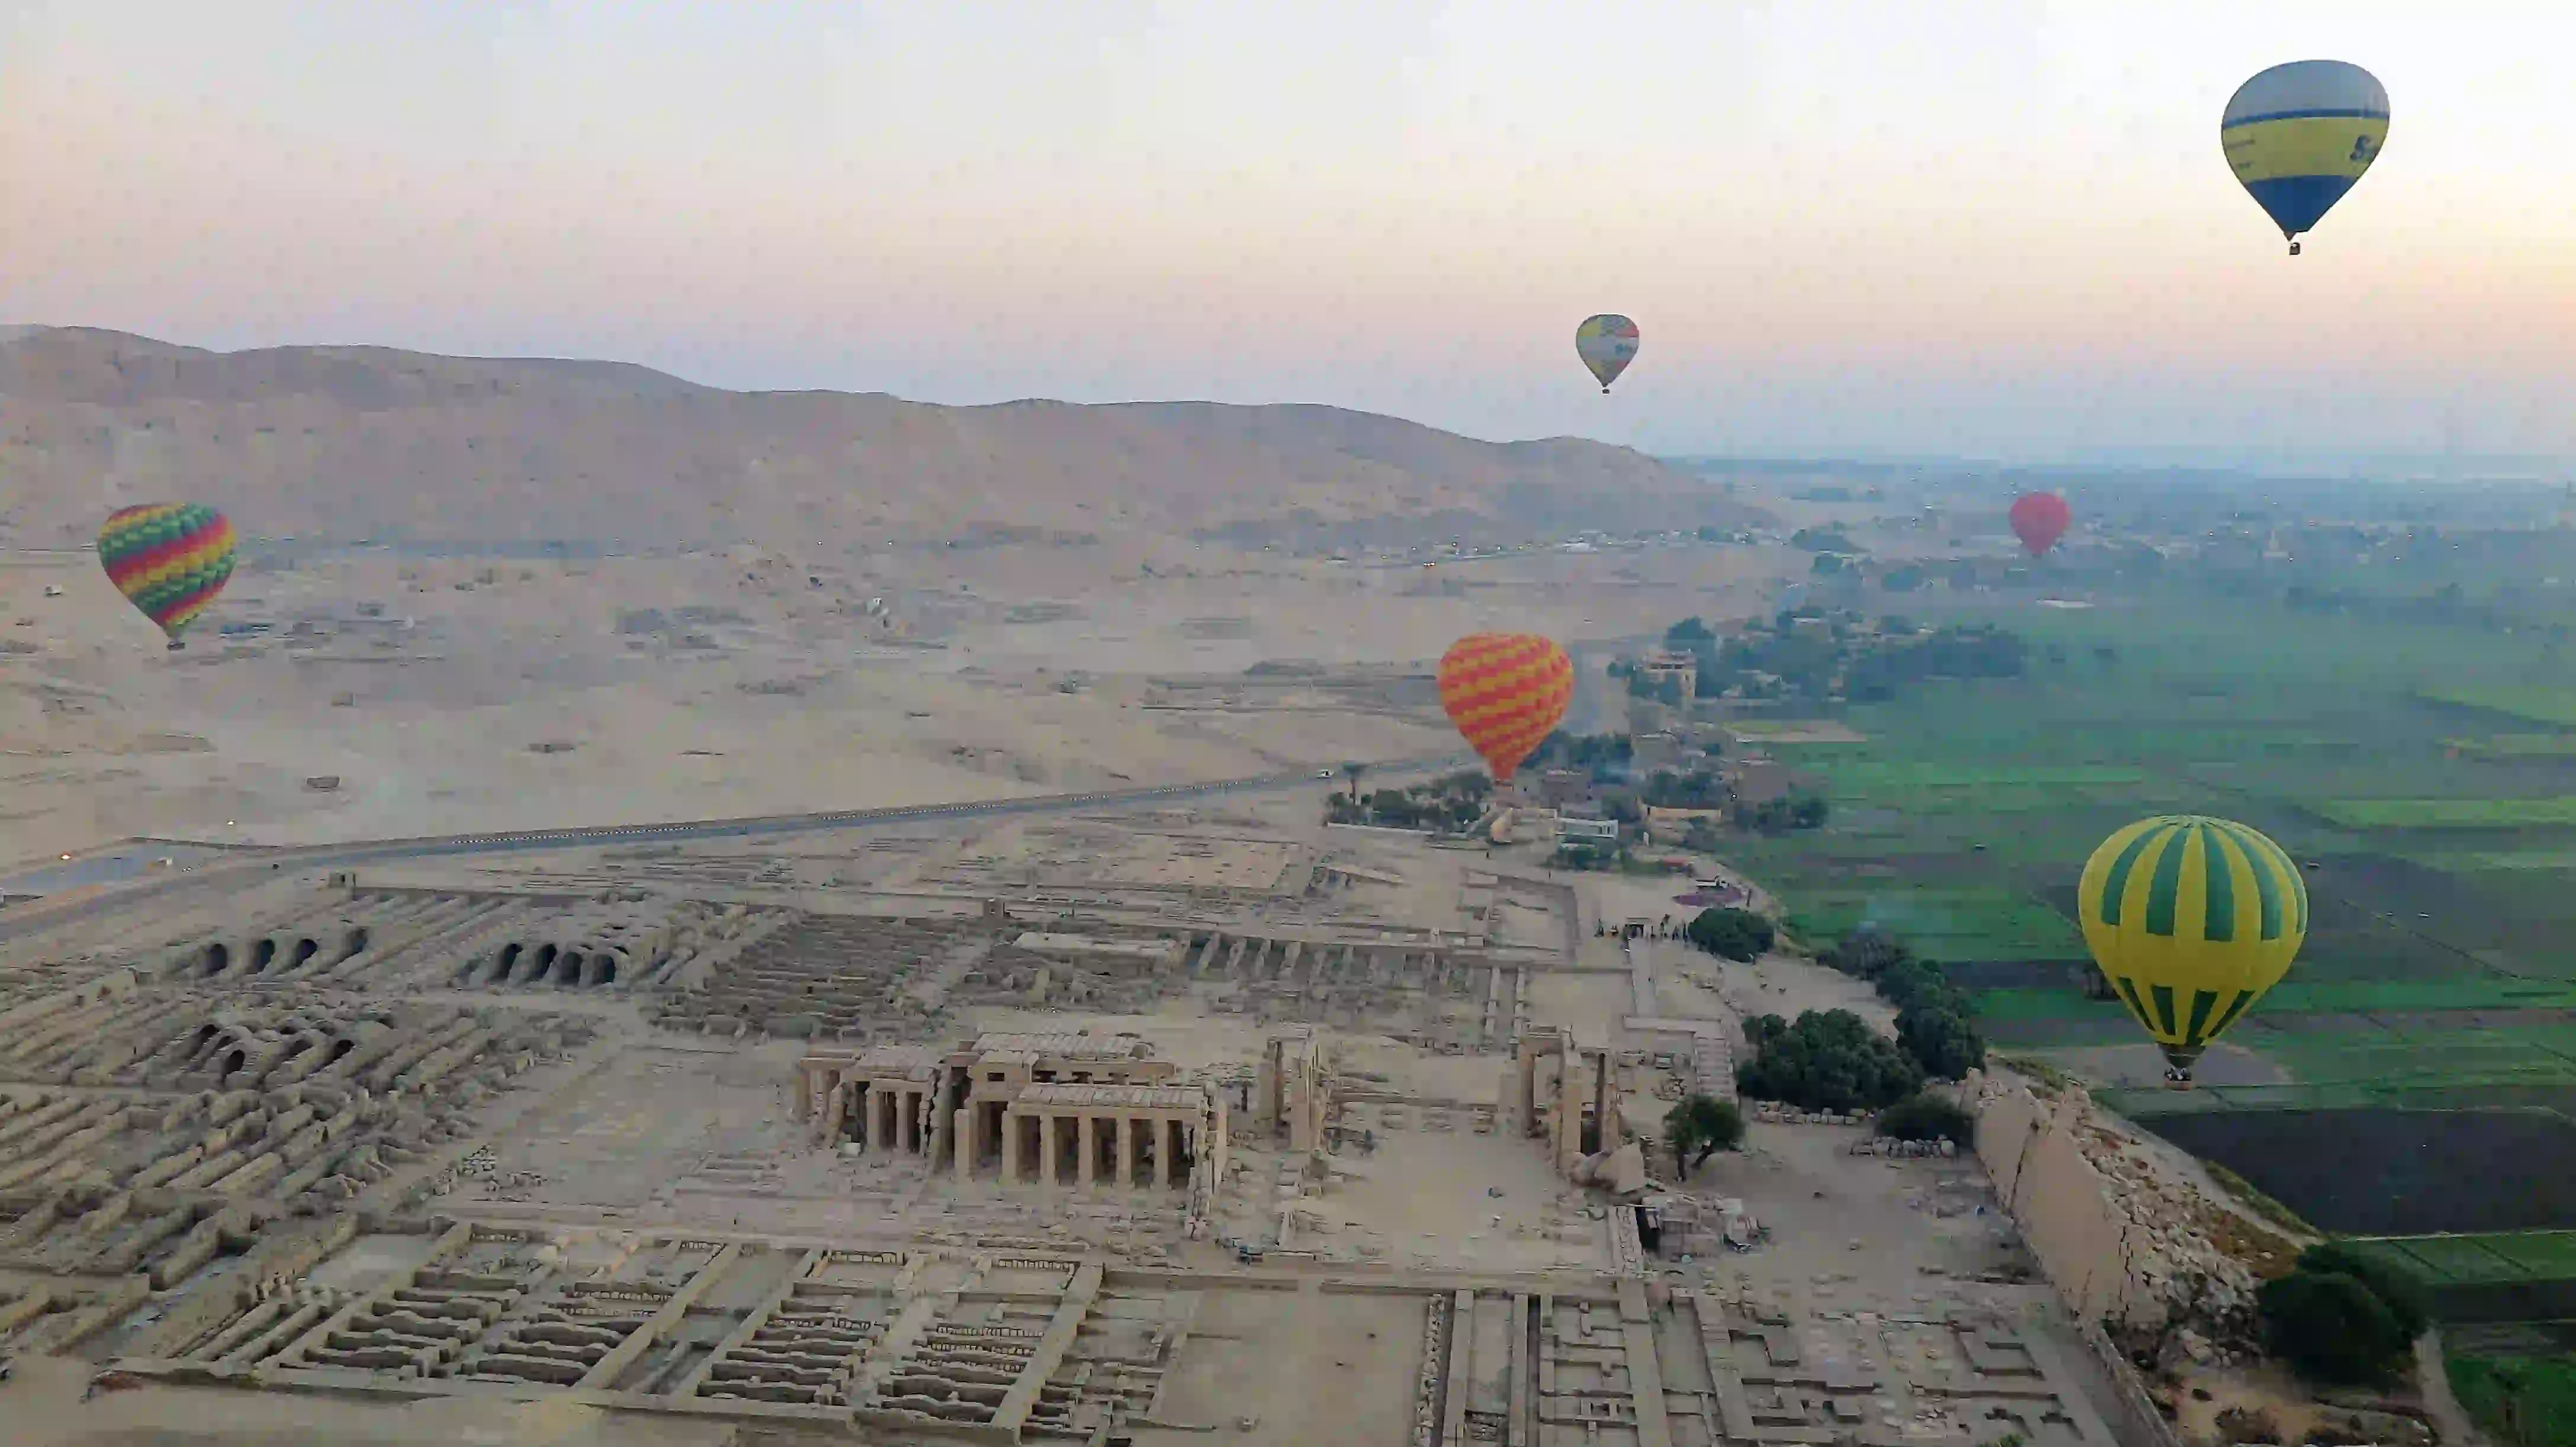 Luxor Ballons Highlights , Egypt Travel Booking.webp